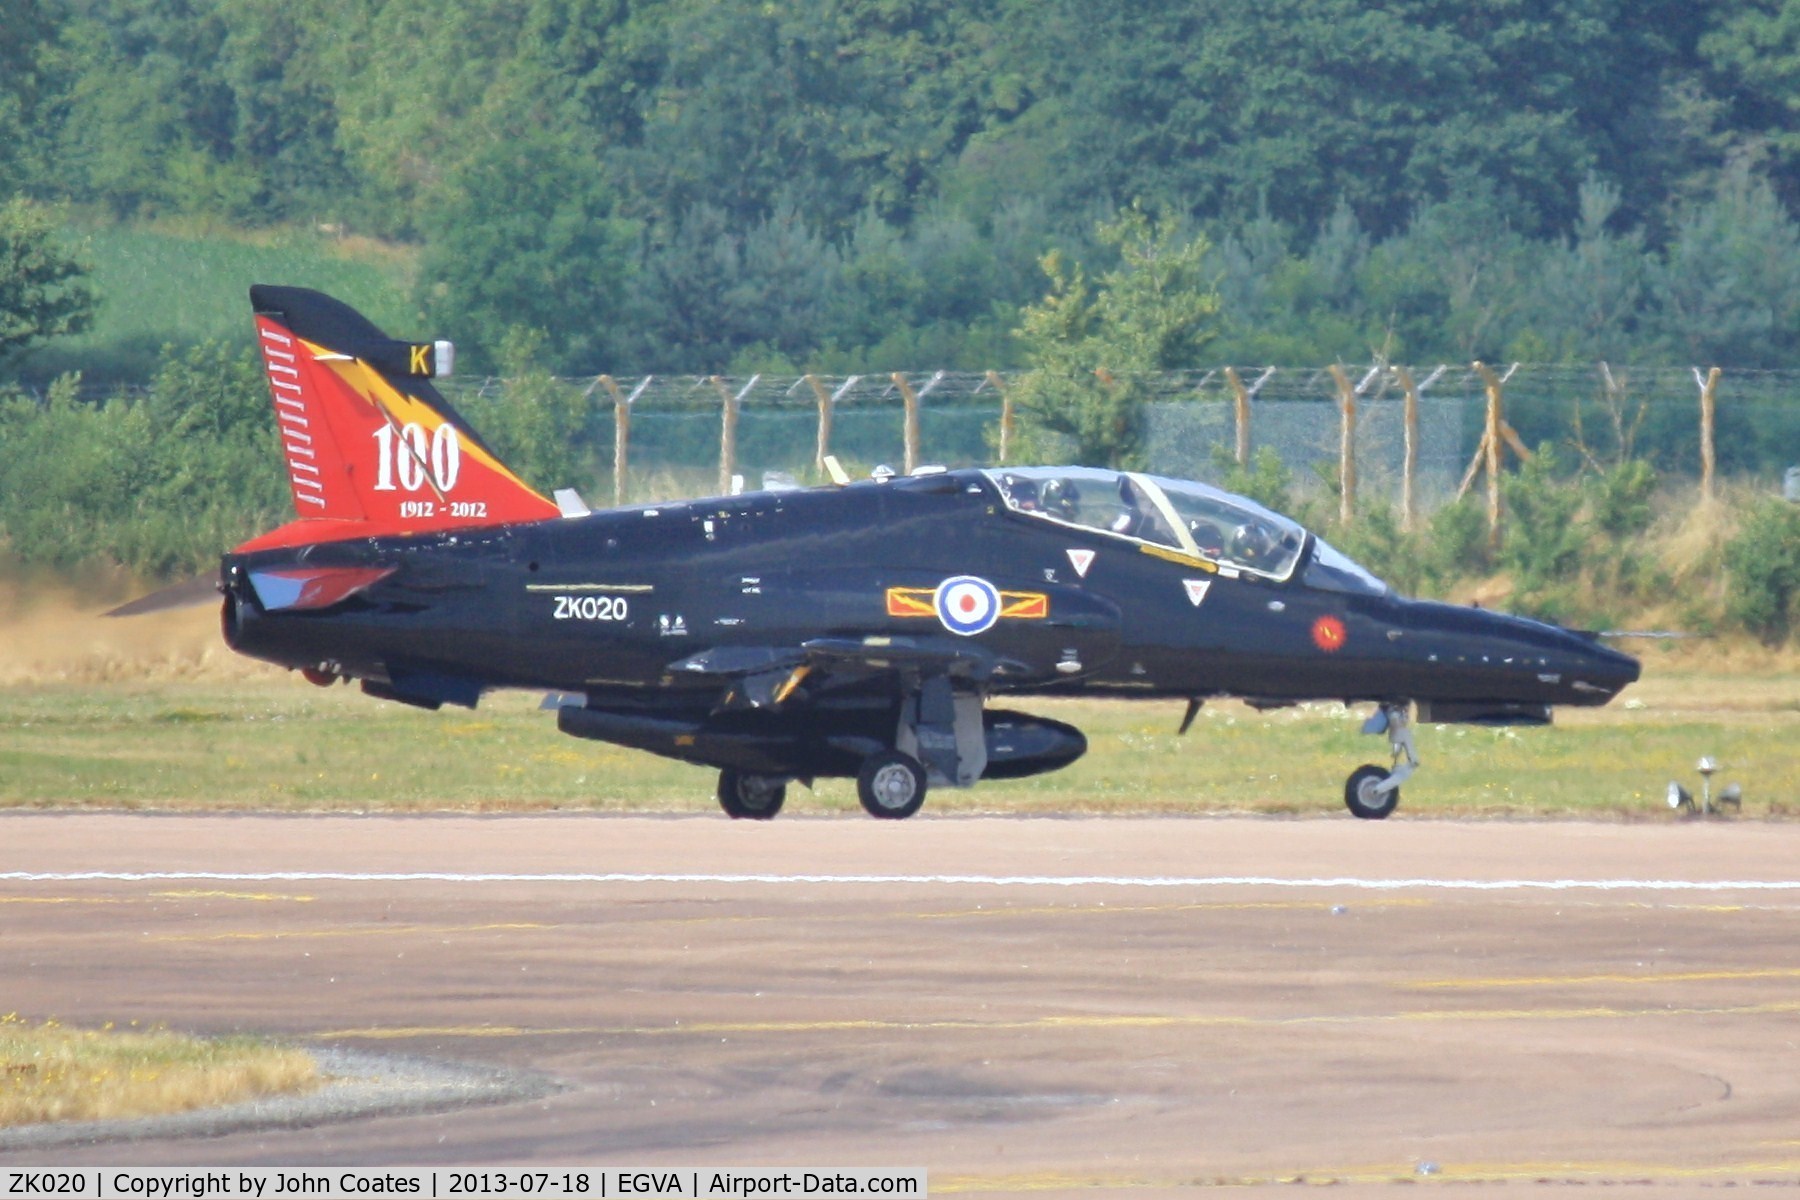 ZK020, 2009 British Aerospace Hawk T2 C/N RT011/1249, Arriving at RIAT in 2013 display scheme.